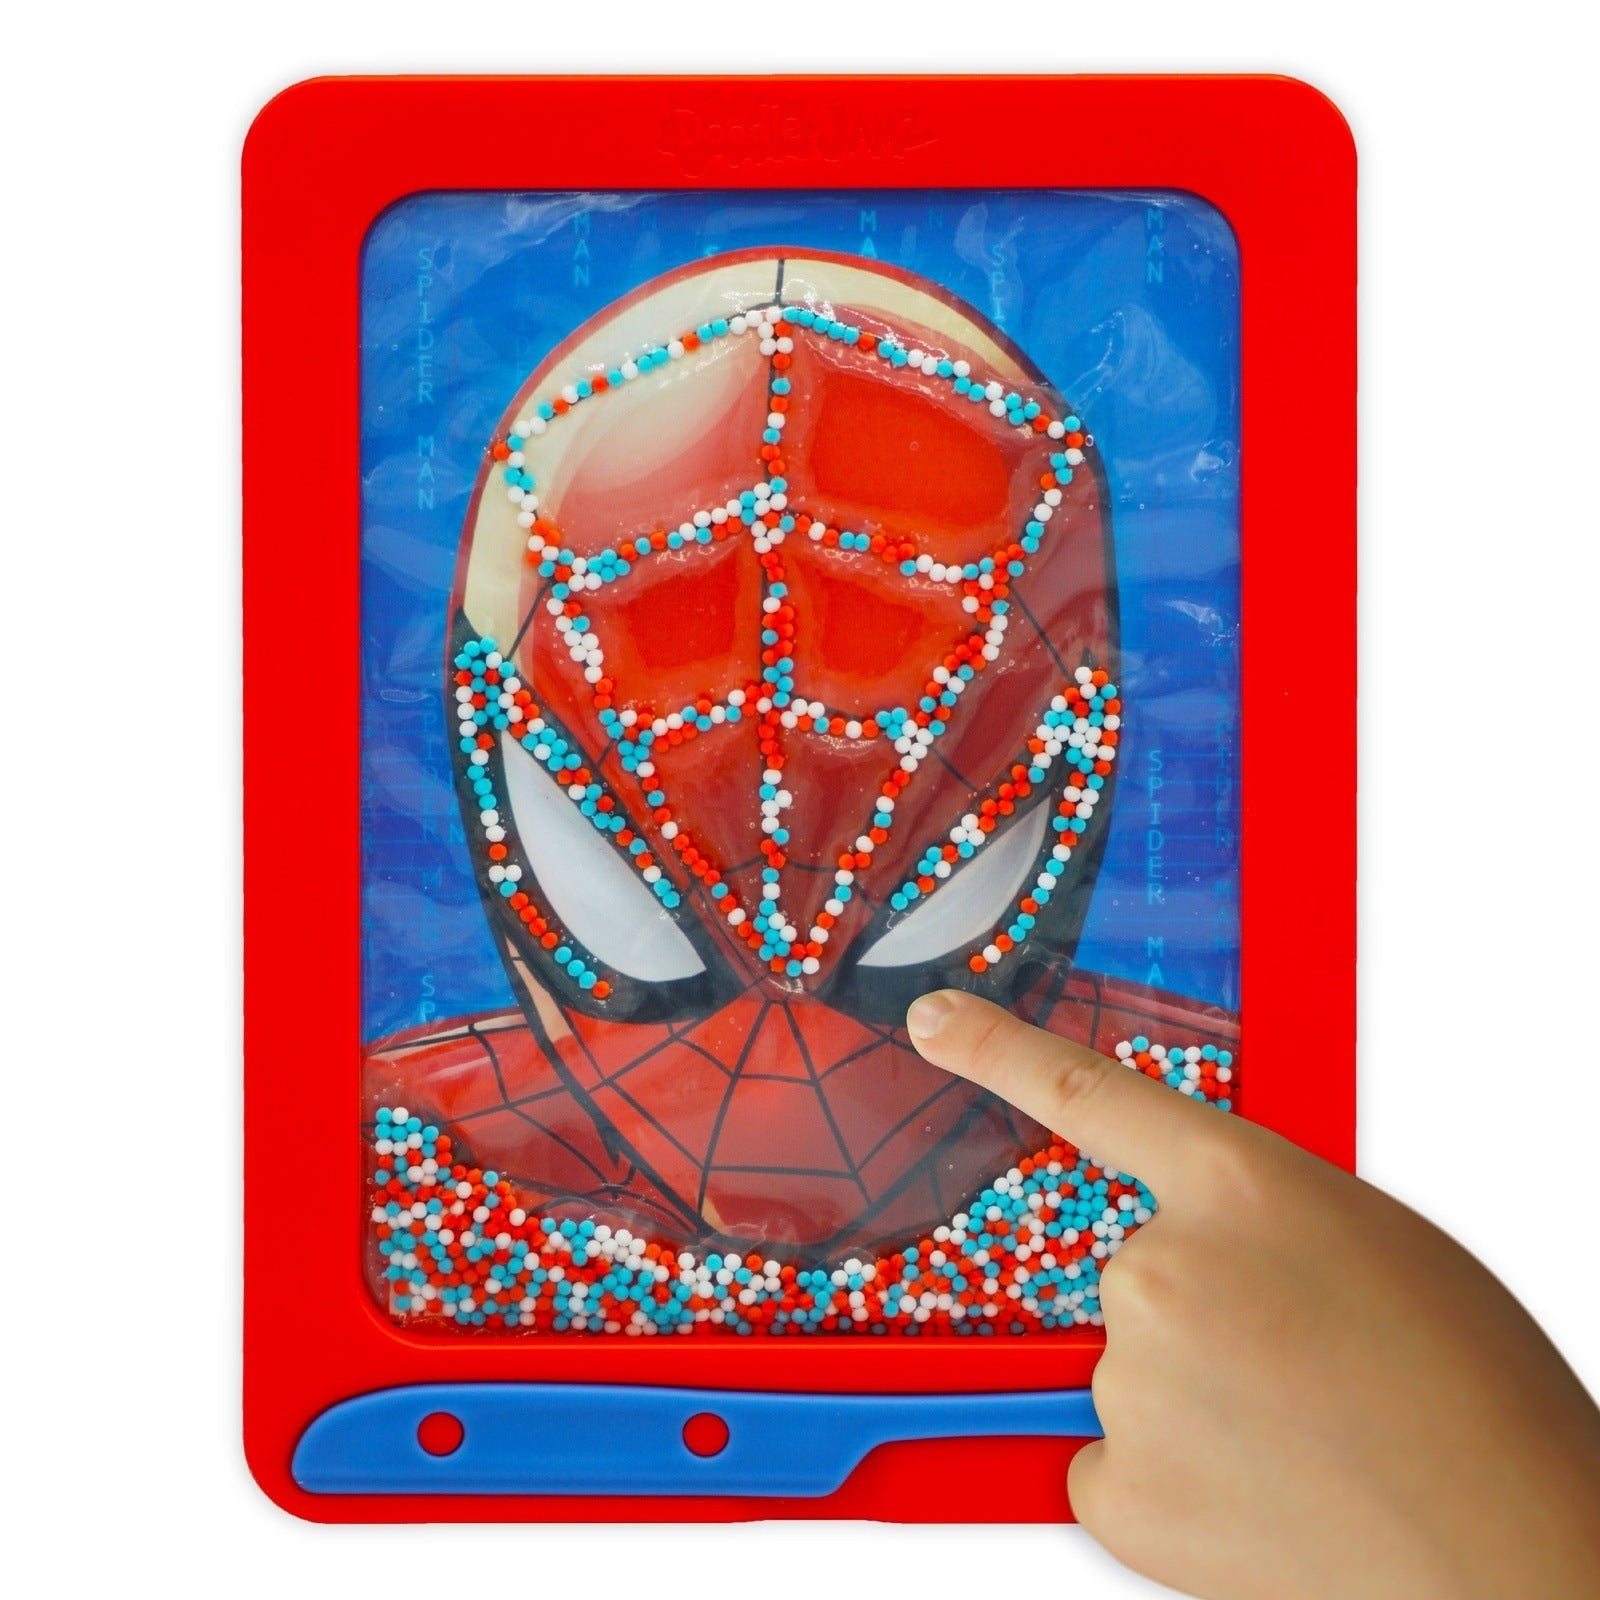  DoodleJamz Marvel JellyPics - Sensory Drawing Pads